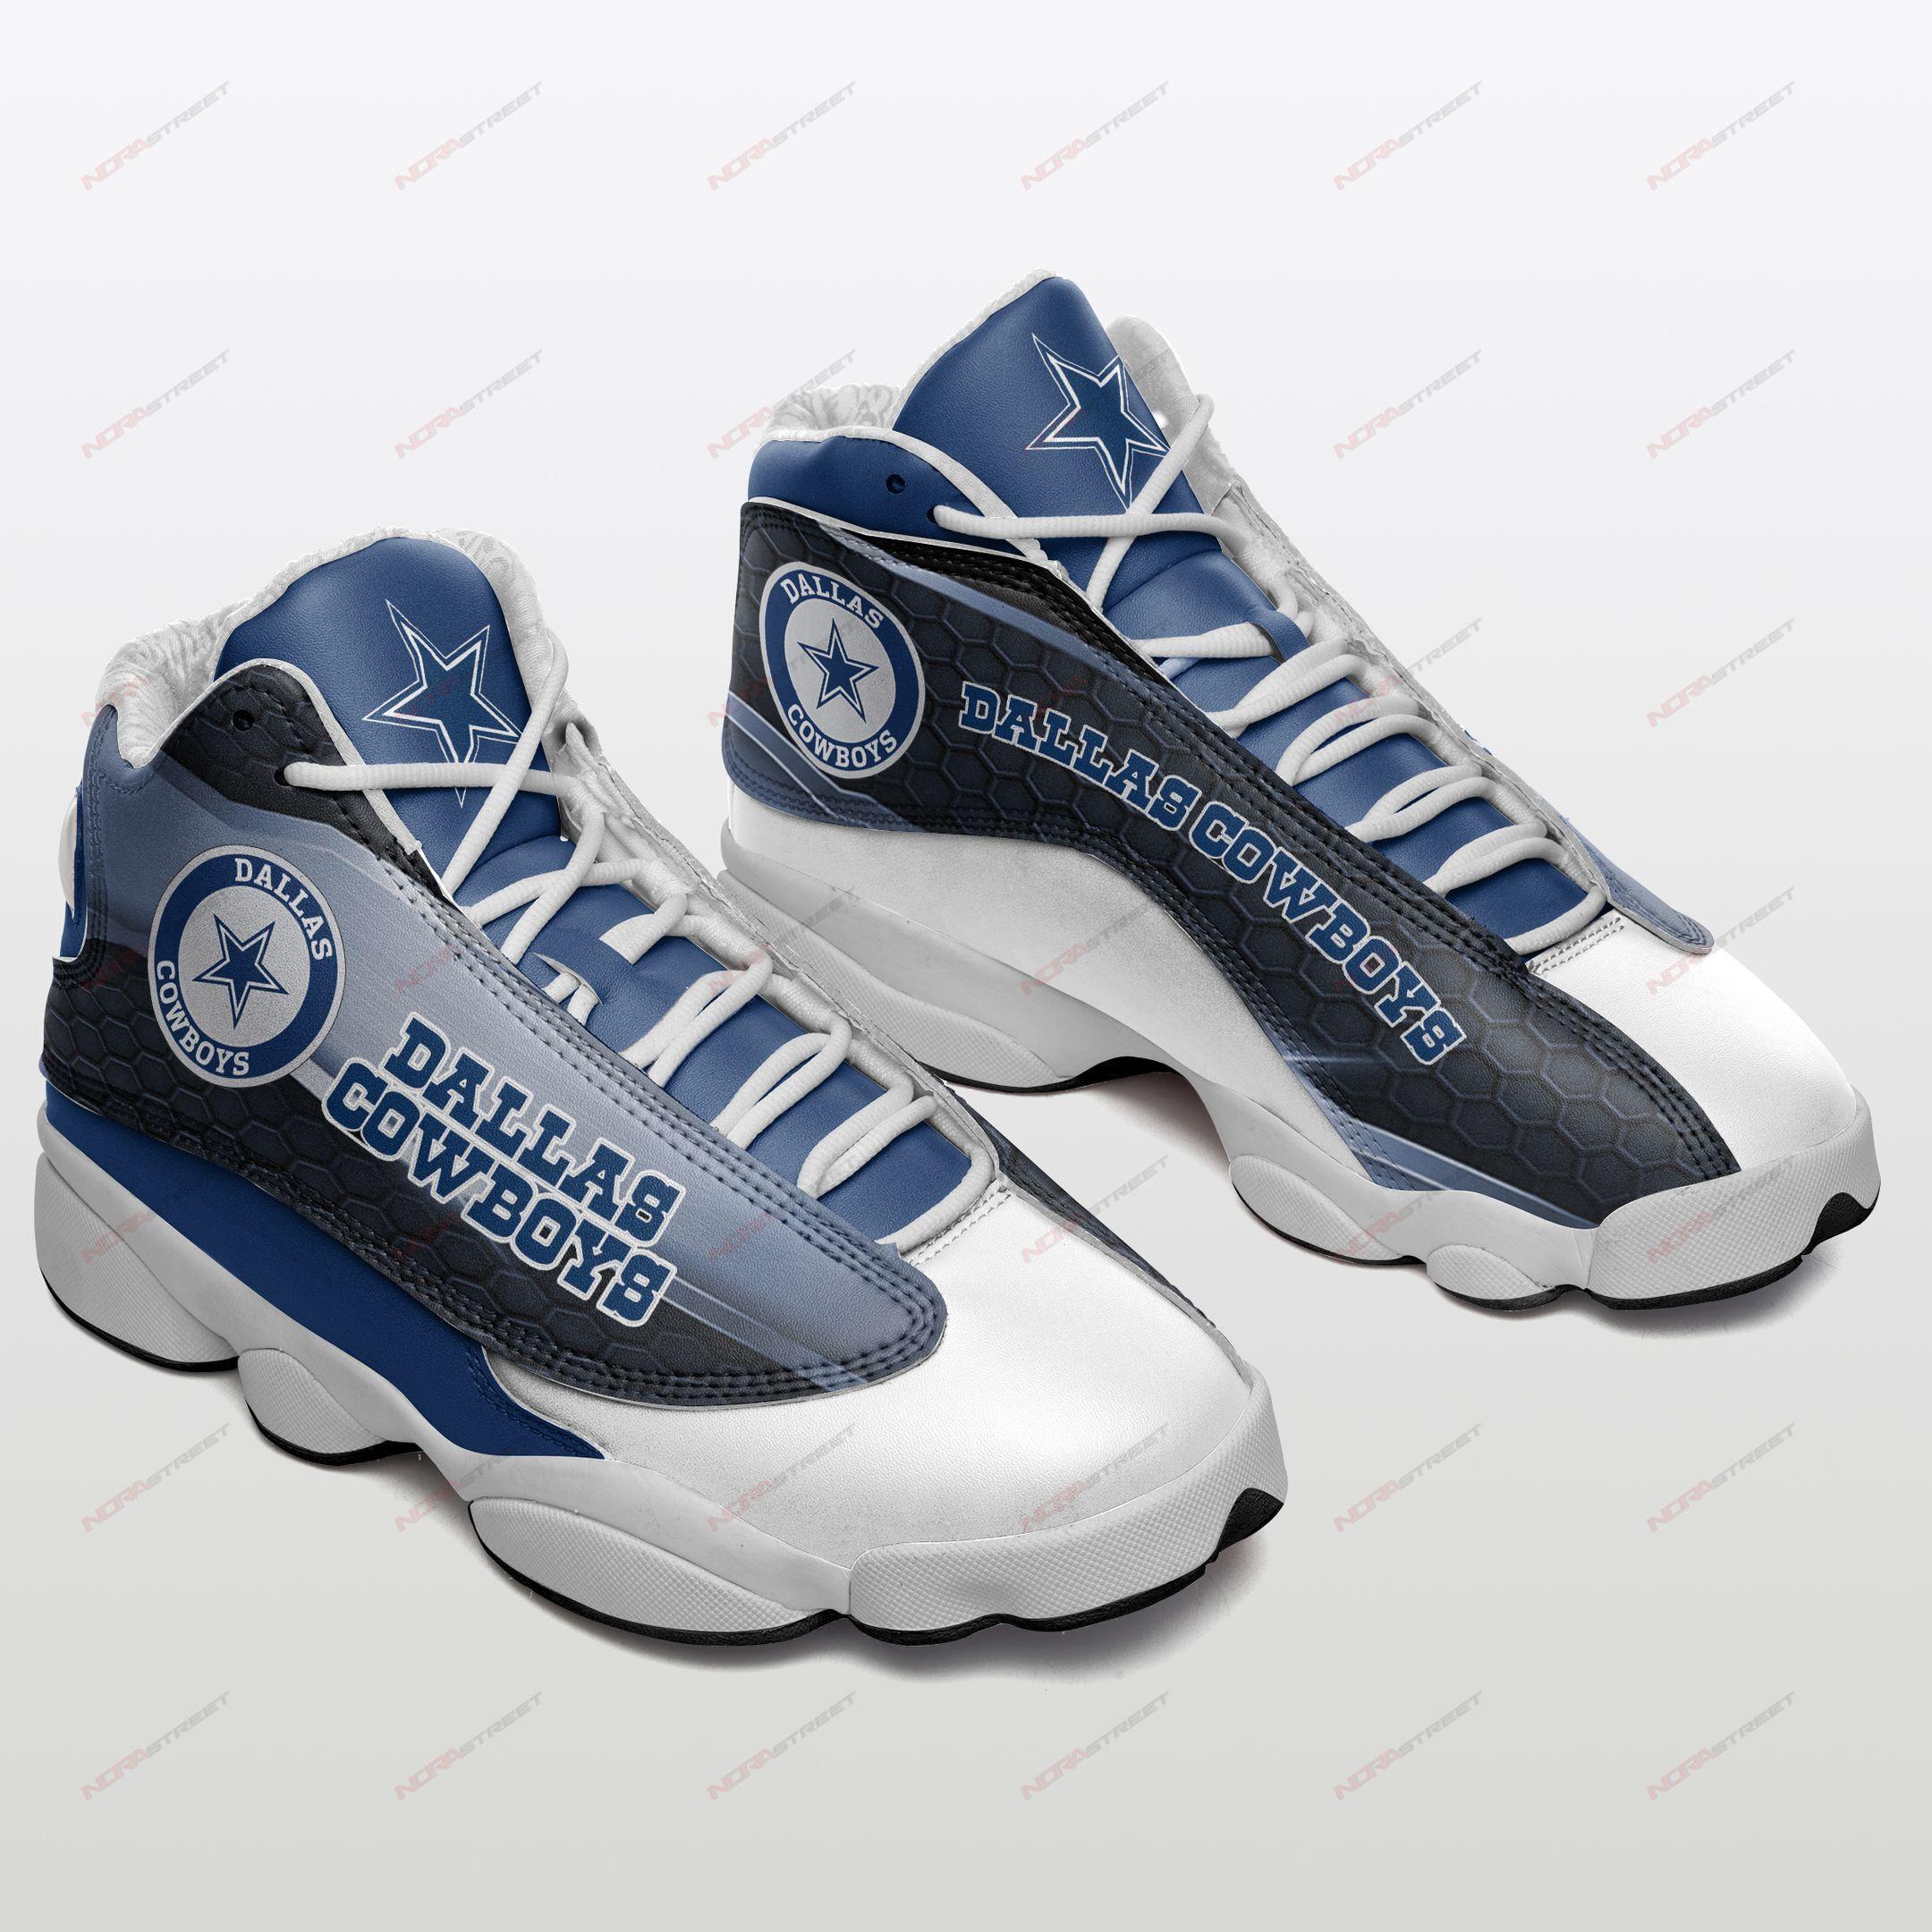 Dallas Cowboys Air Jordan 13 Sneakers Sport Shoes Plus Size